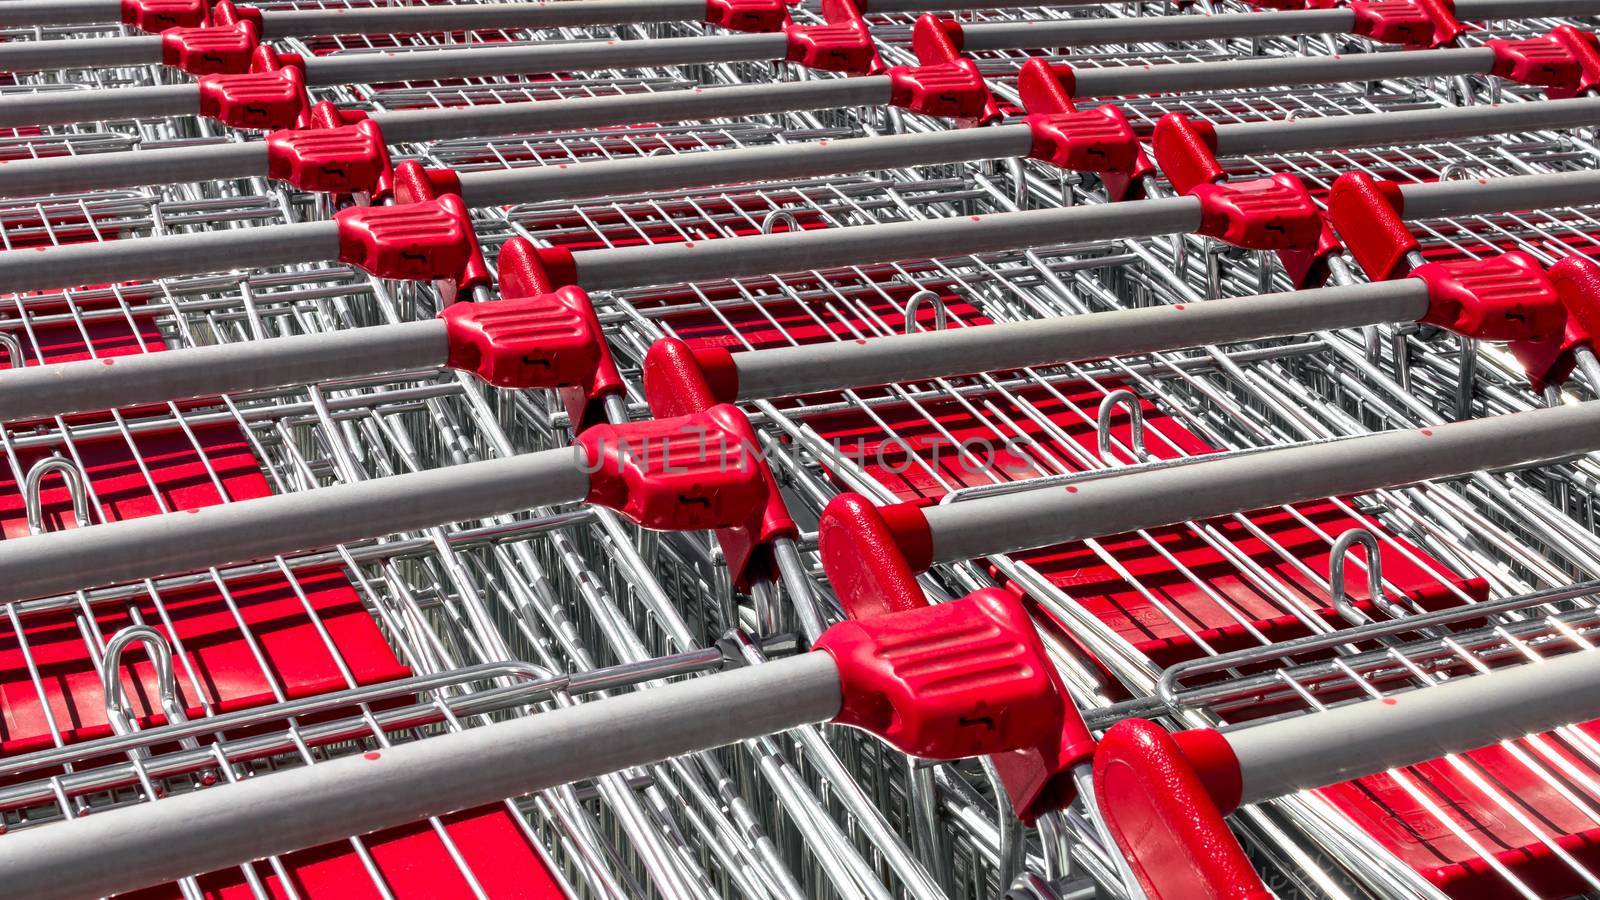 Shopping cart pattern by germanopoli